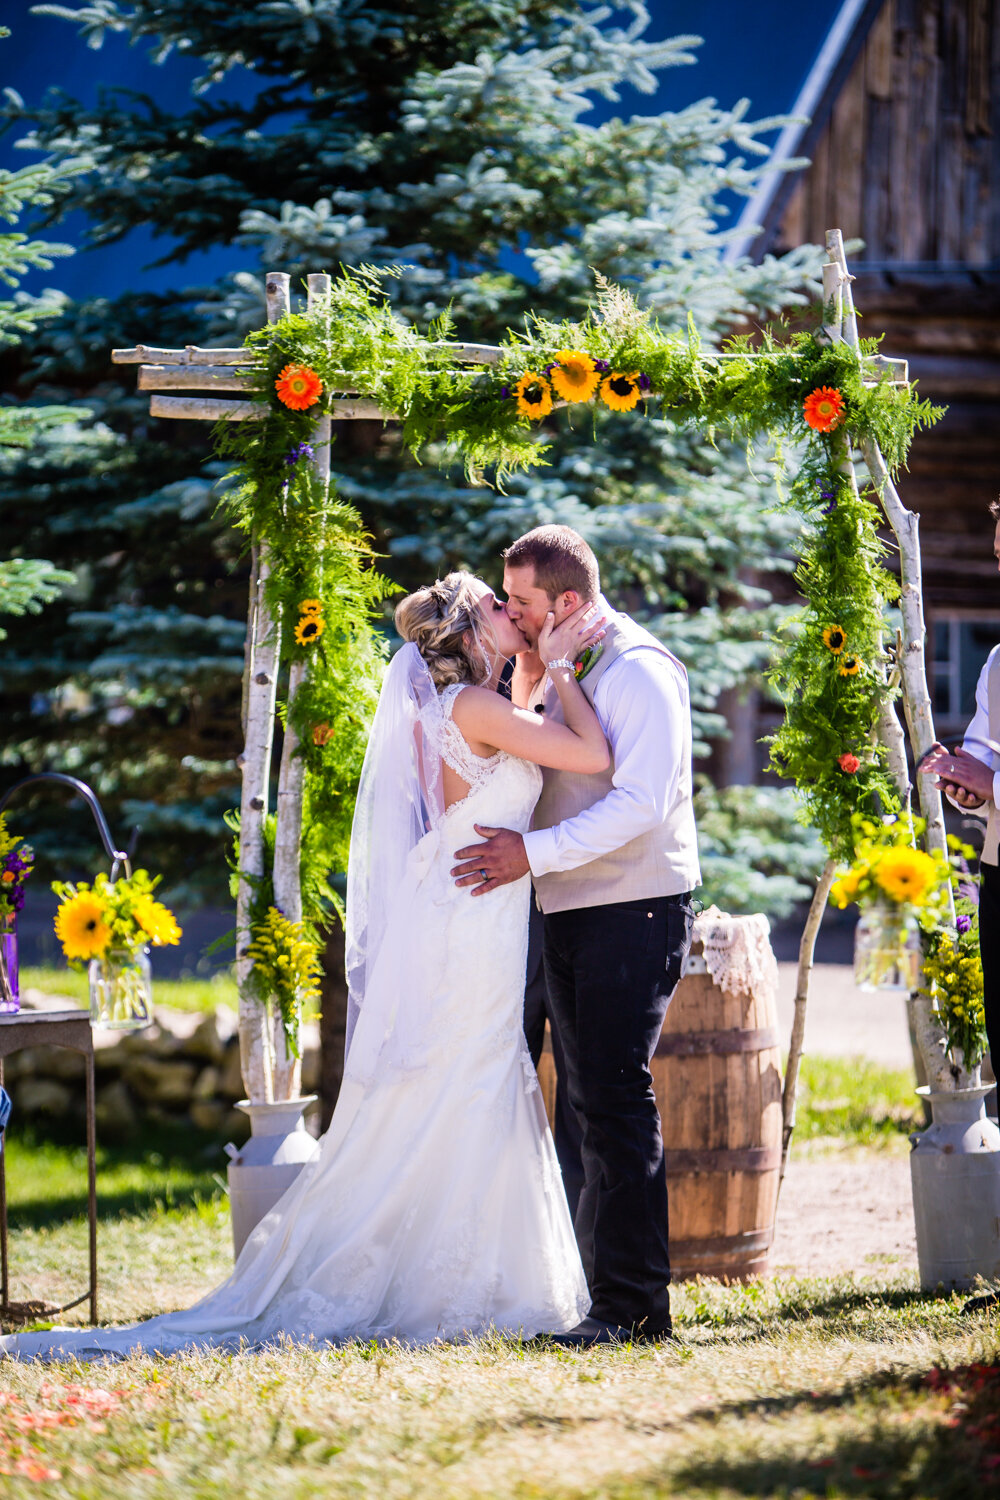  You may kiss the bride.&nbsp;Wedding at The barn at Evergreen Memorial. Photographed by JMGant Photography.    